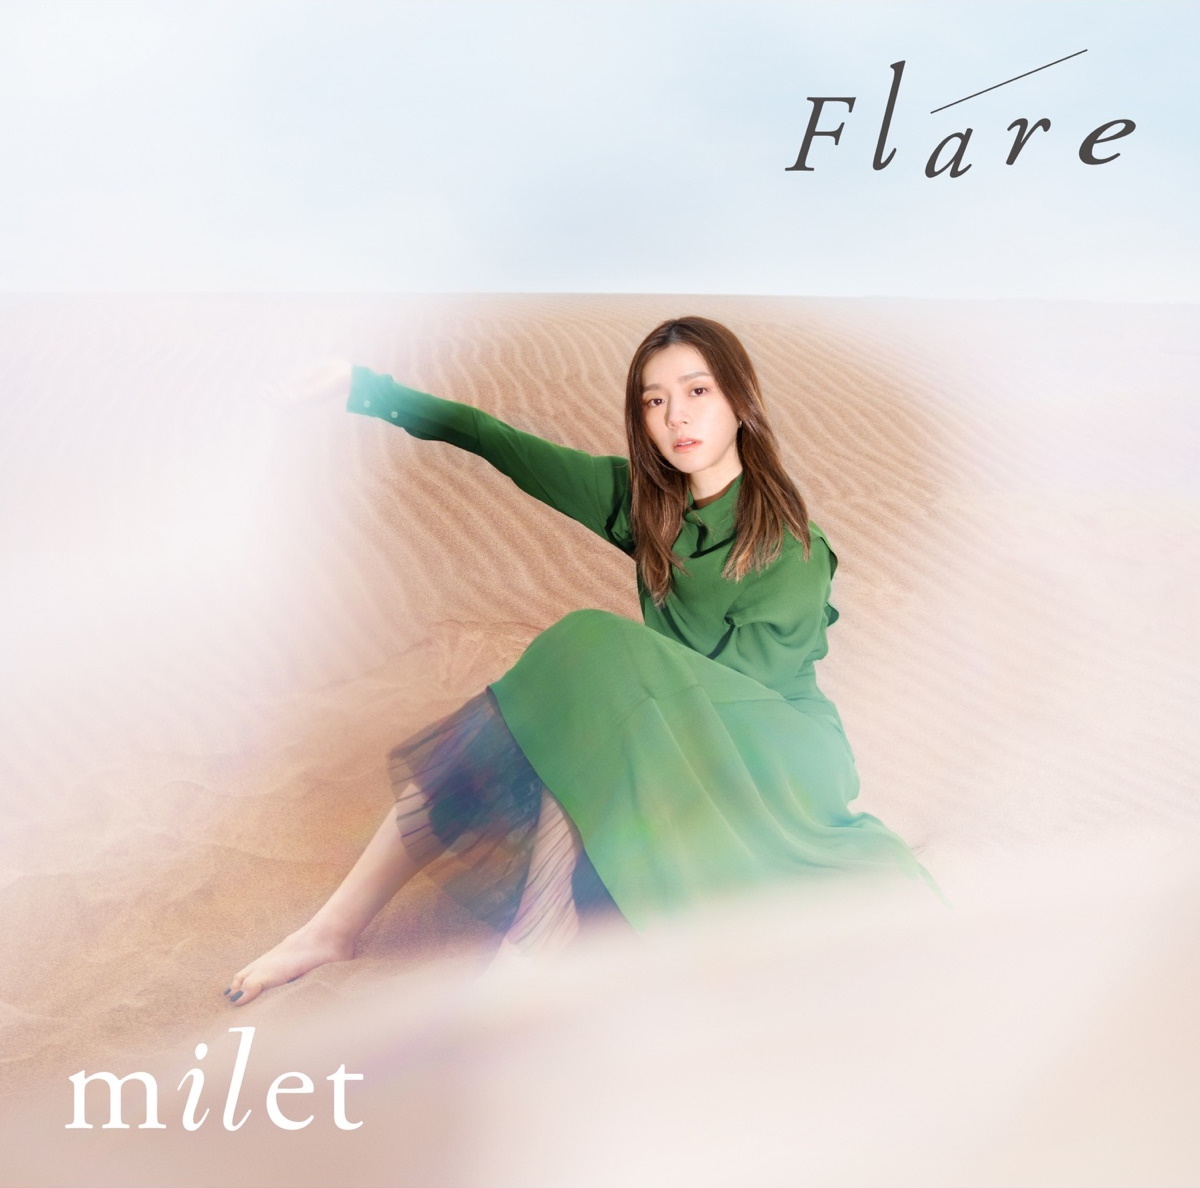 『milet - Flare 歌詞』収録の『Flare』ジャケット